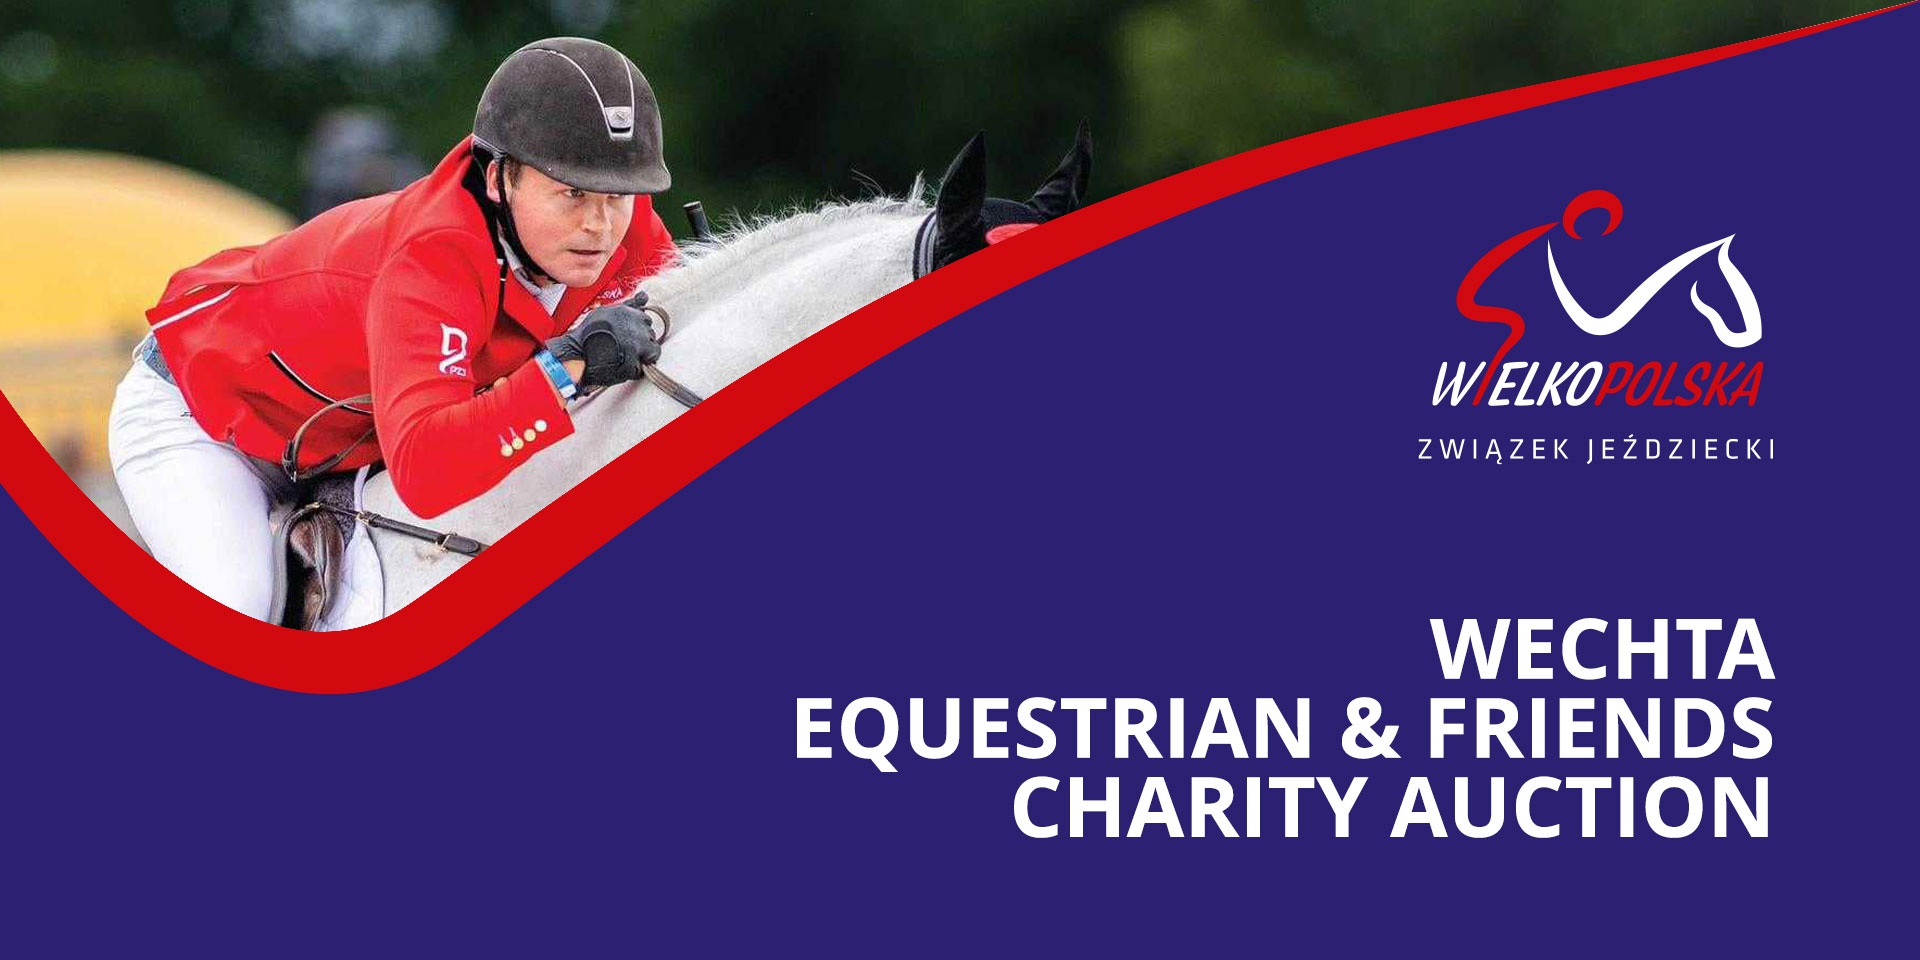 Wechta Equestrian & Friends Charity Auction